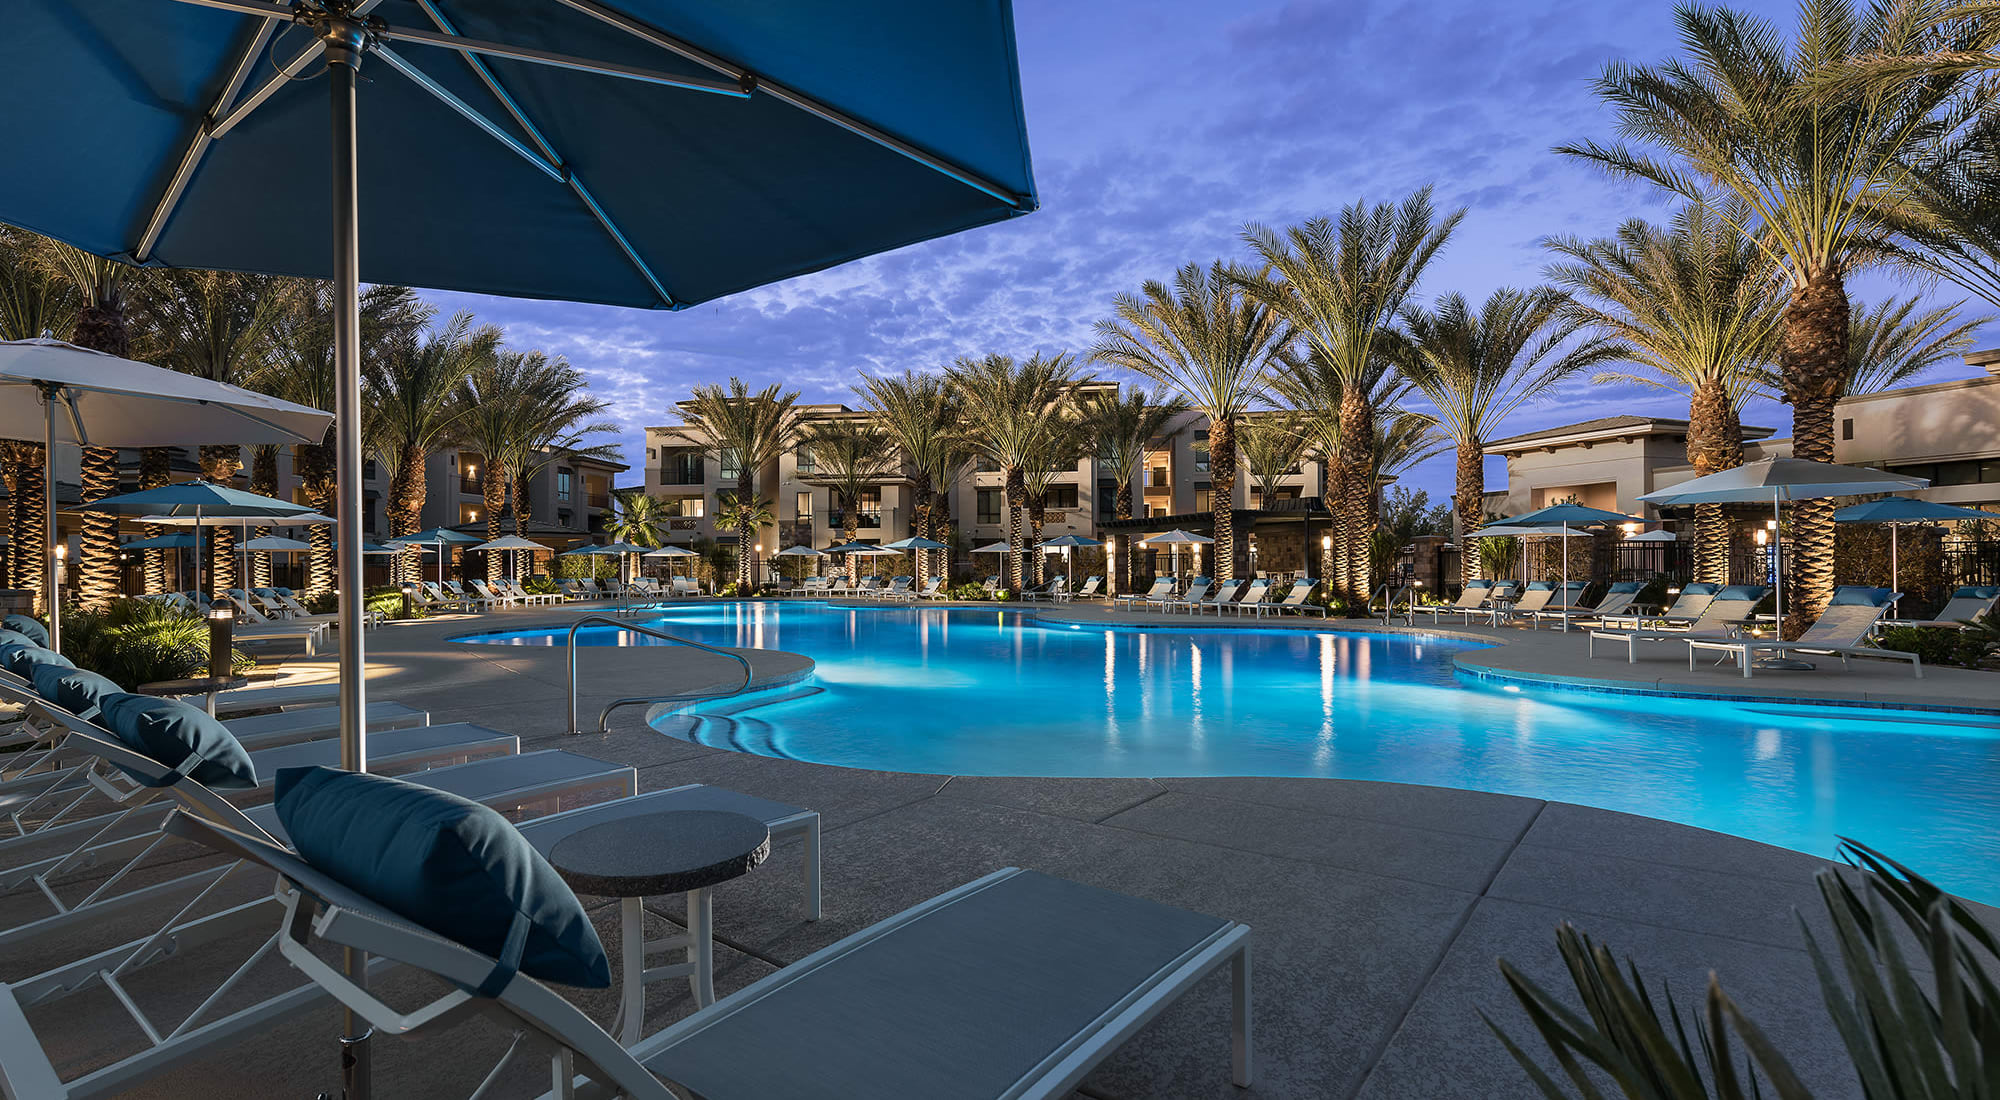 San Bellara: North Scottsdale, AZ Luxury Apartments for Rent